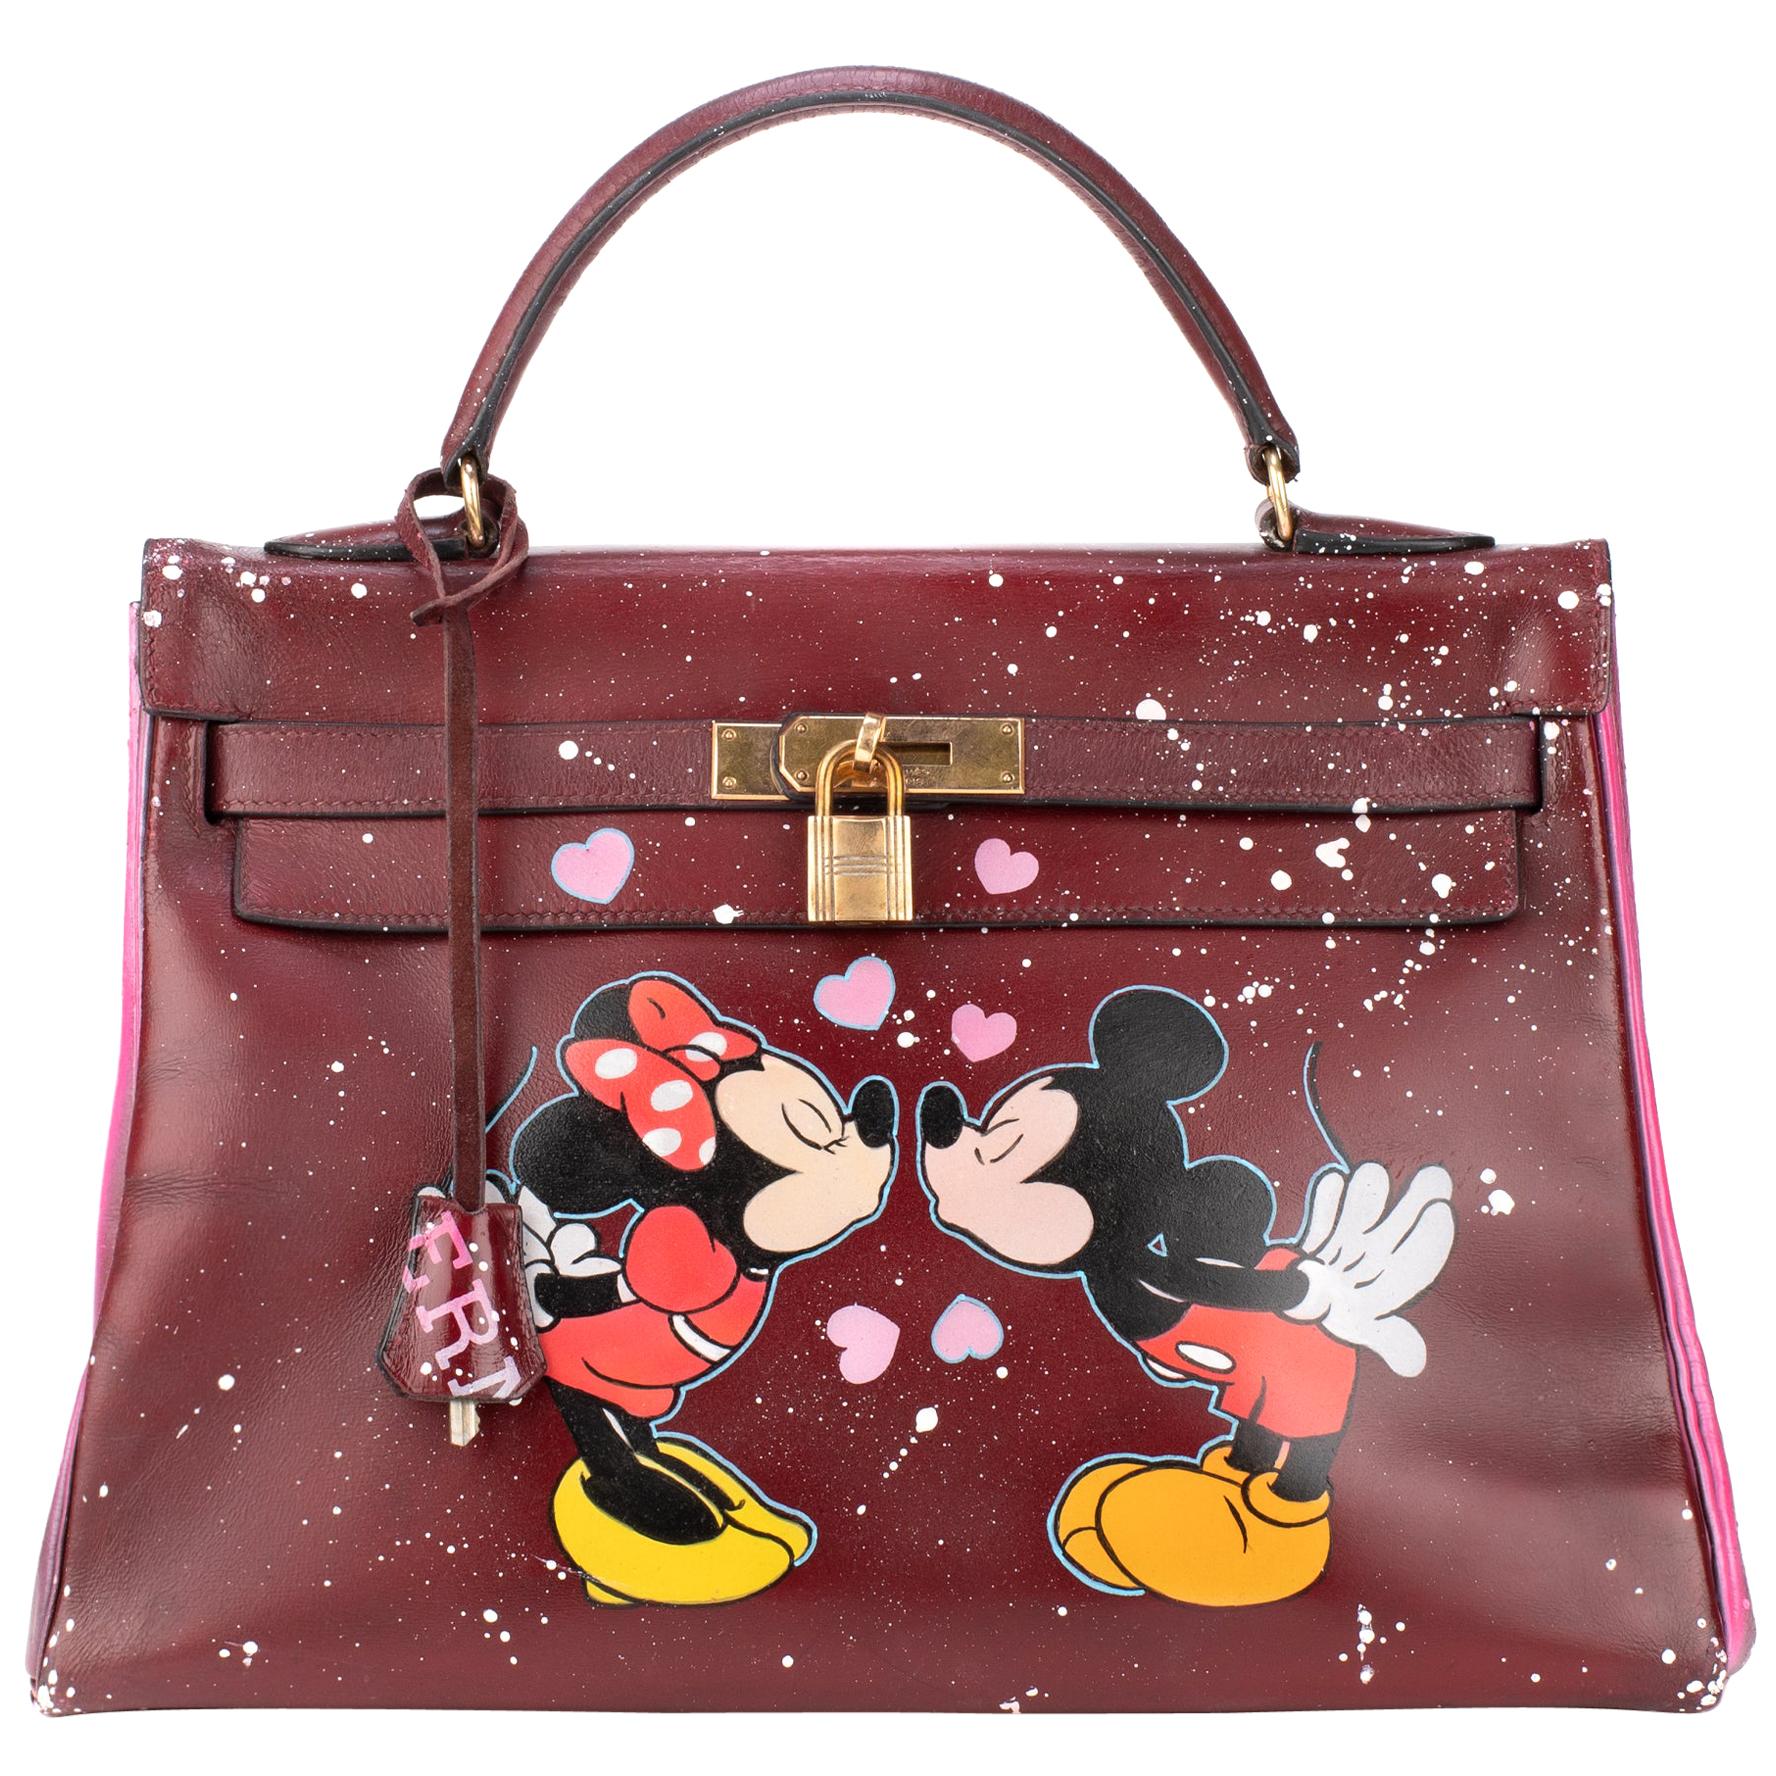 Handbag Hermès Kelly 32 in burgundy calfskin customized "Minnie&Mickey in love"!